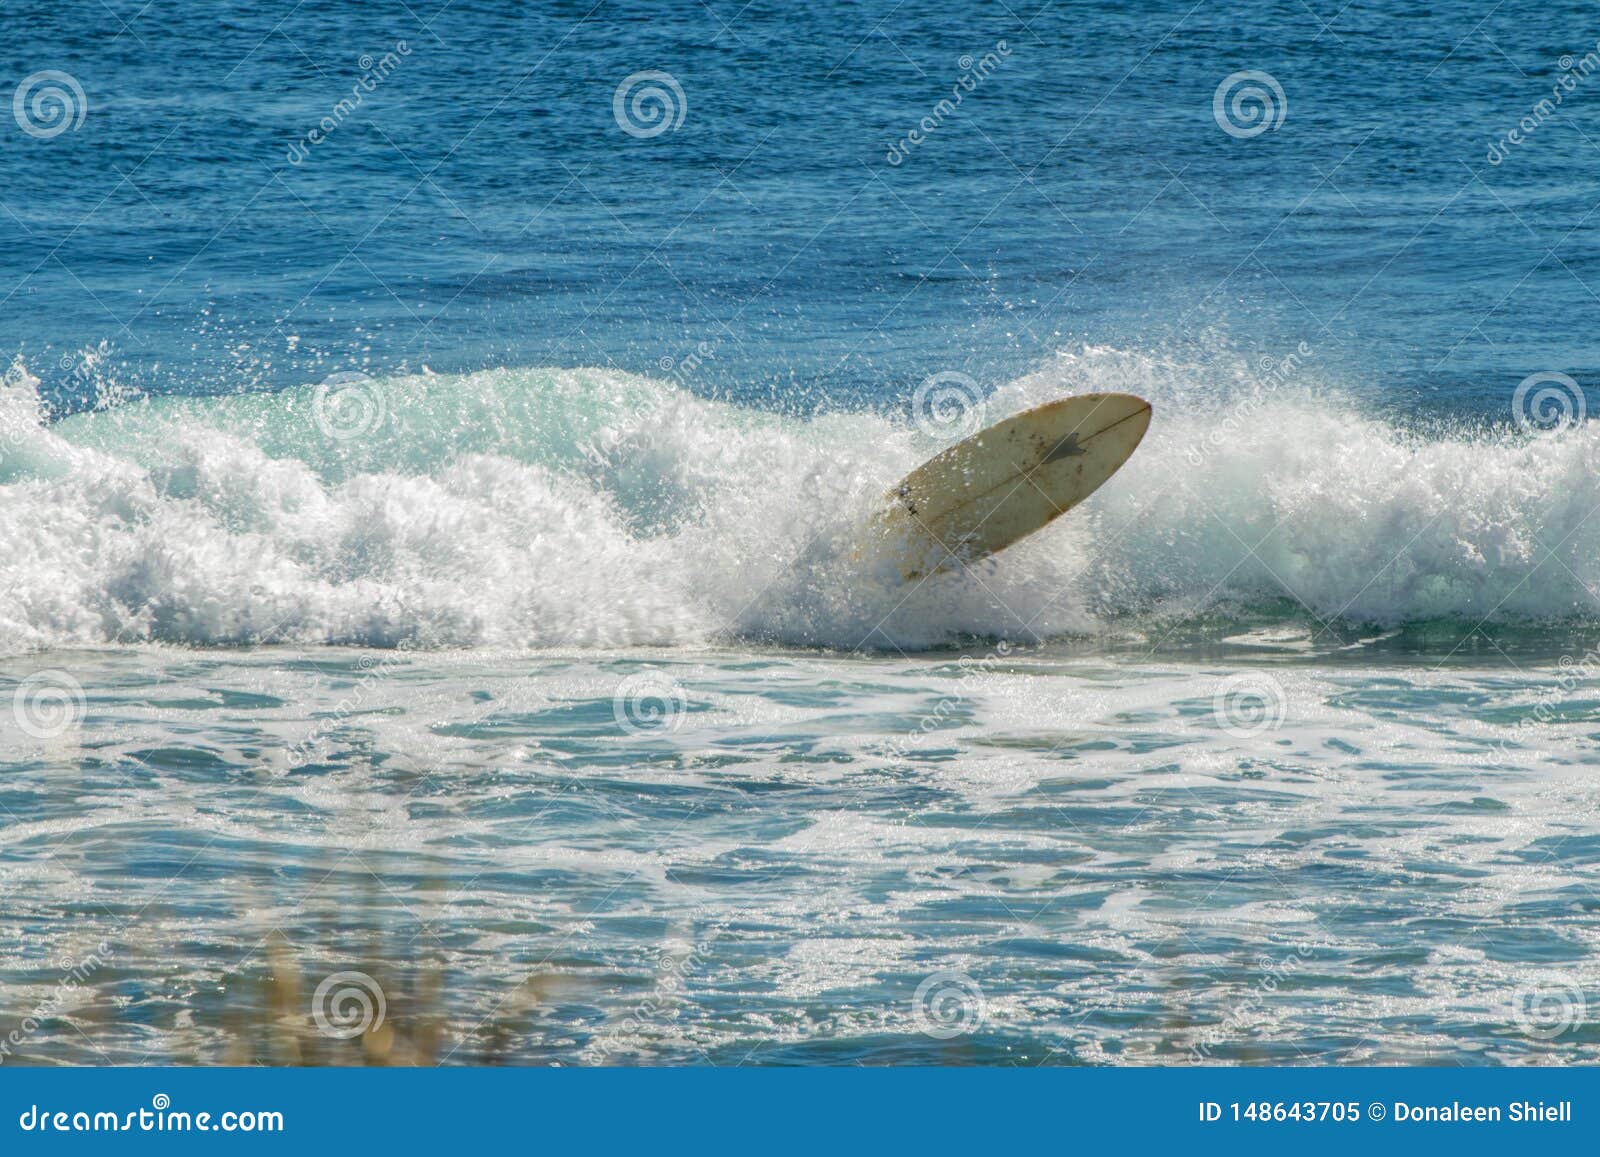 Kipiel zg?adza przy Ningaloo. Surfboard in waves, surfer is out of shot. surf spot in Western Australia in Ningaloo Marine Park. Taken in winter months.